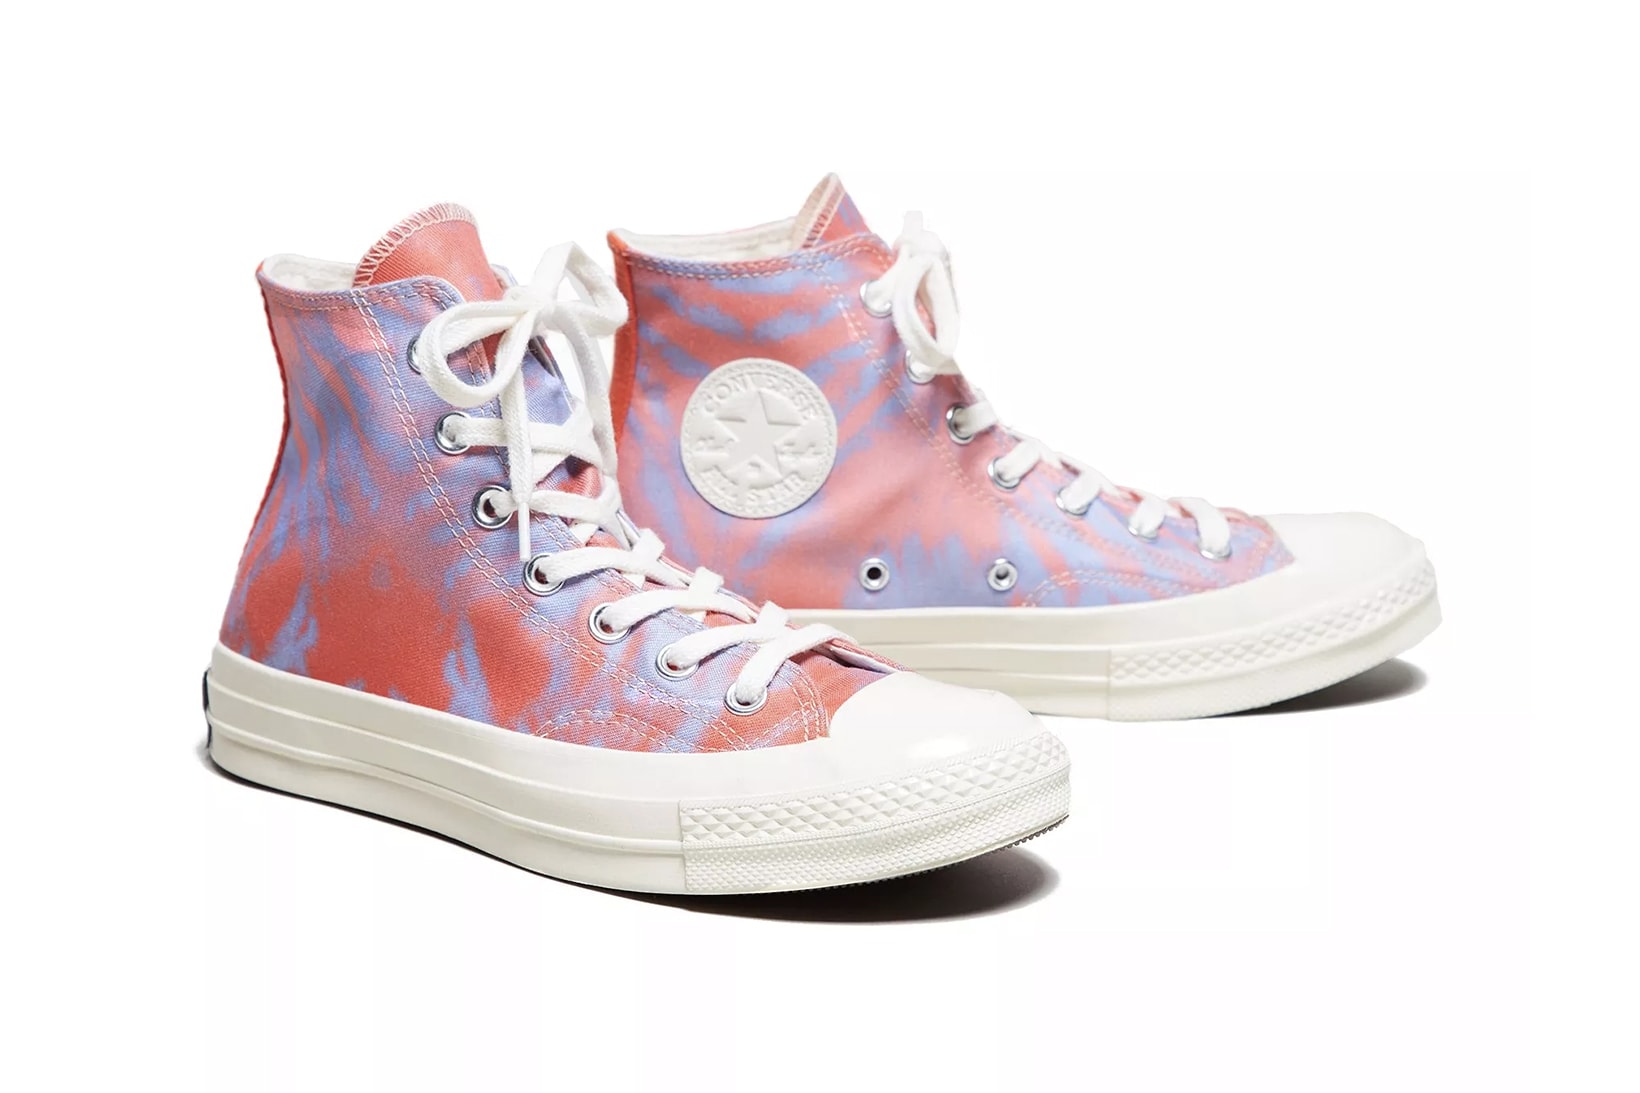 Converse Chuck Taylor All Star Tie-Dye Pink Purple Sneakers